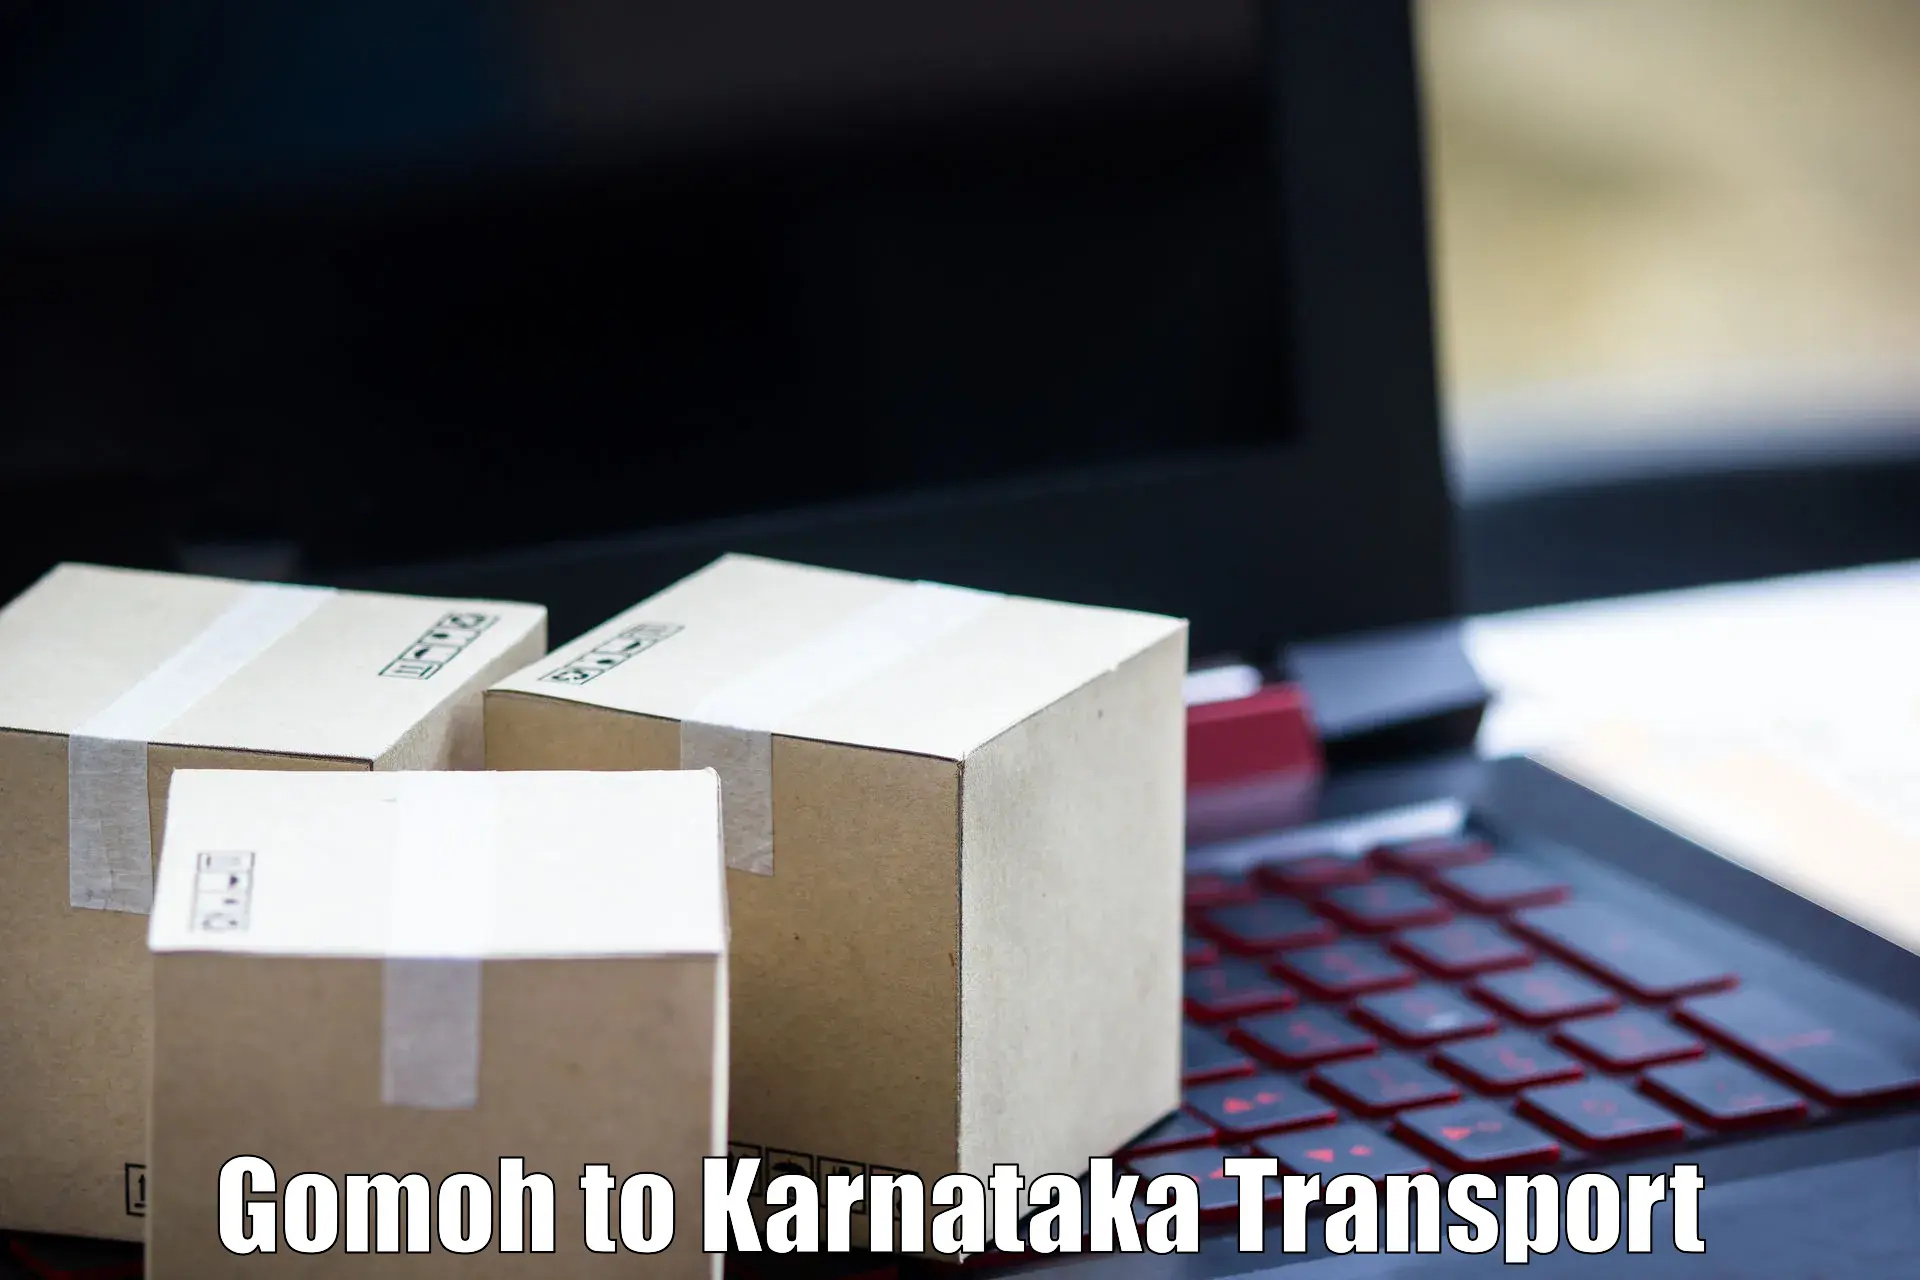 Online transport service Gomoh to Karnataka